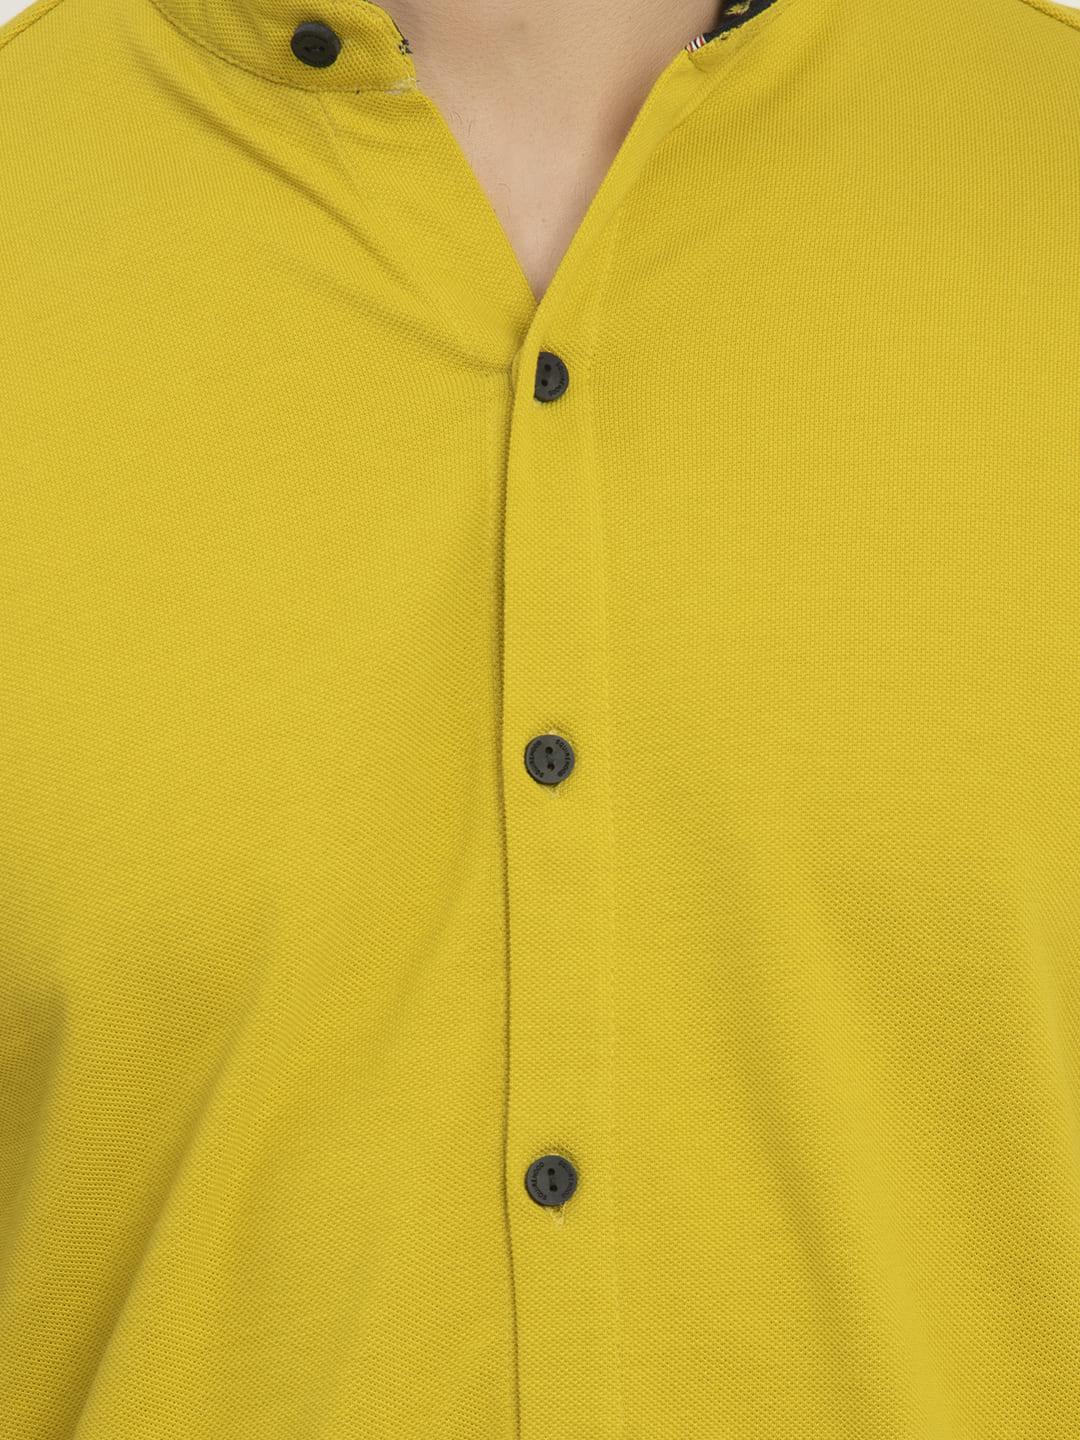 Men's Yellow Mandarin Collar Short Sleeve Shirt